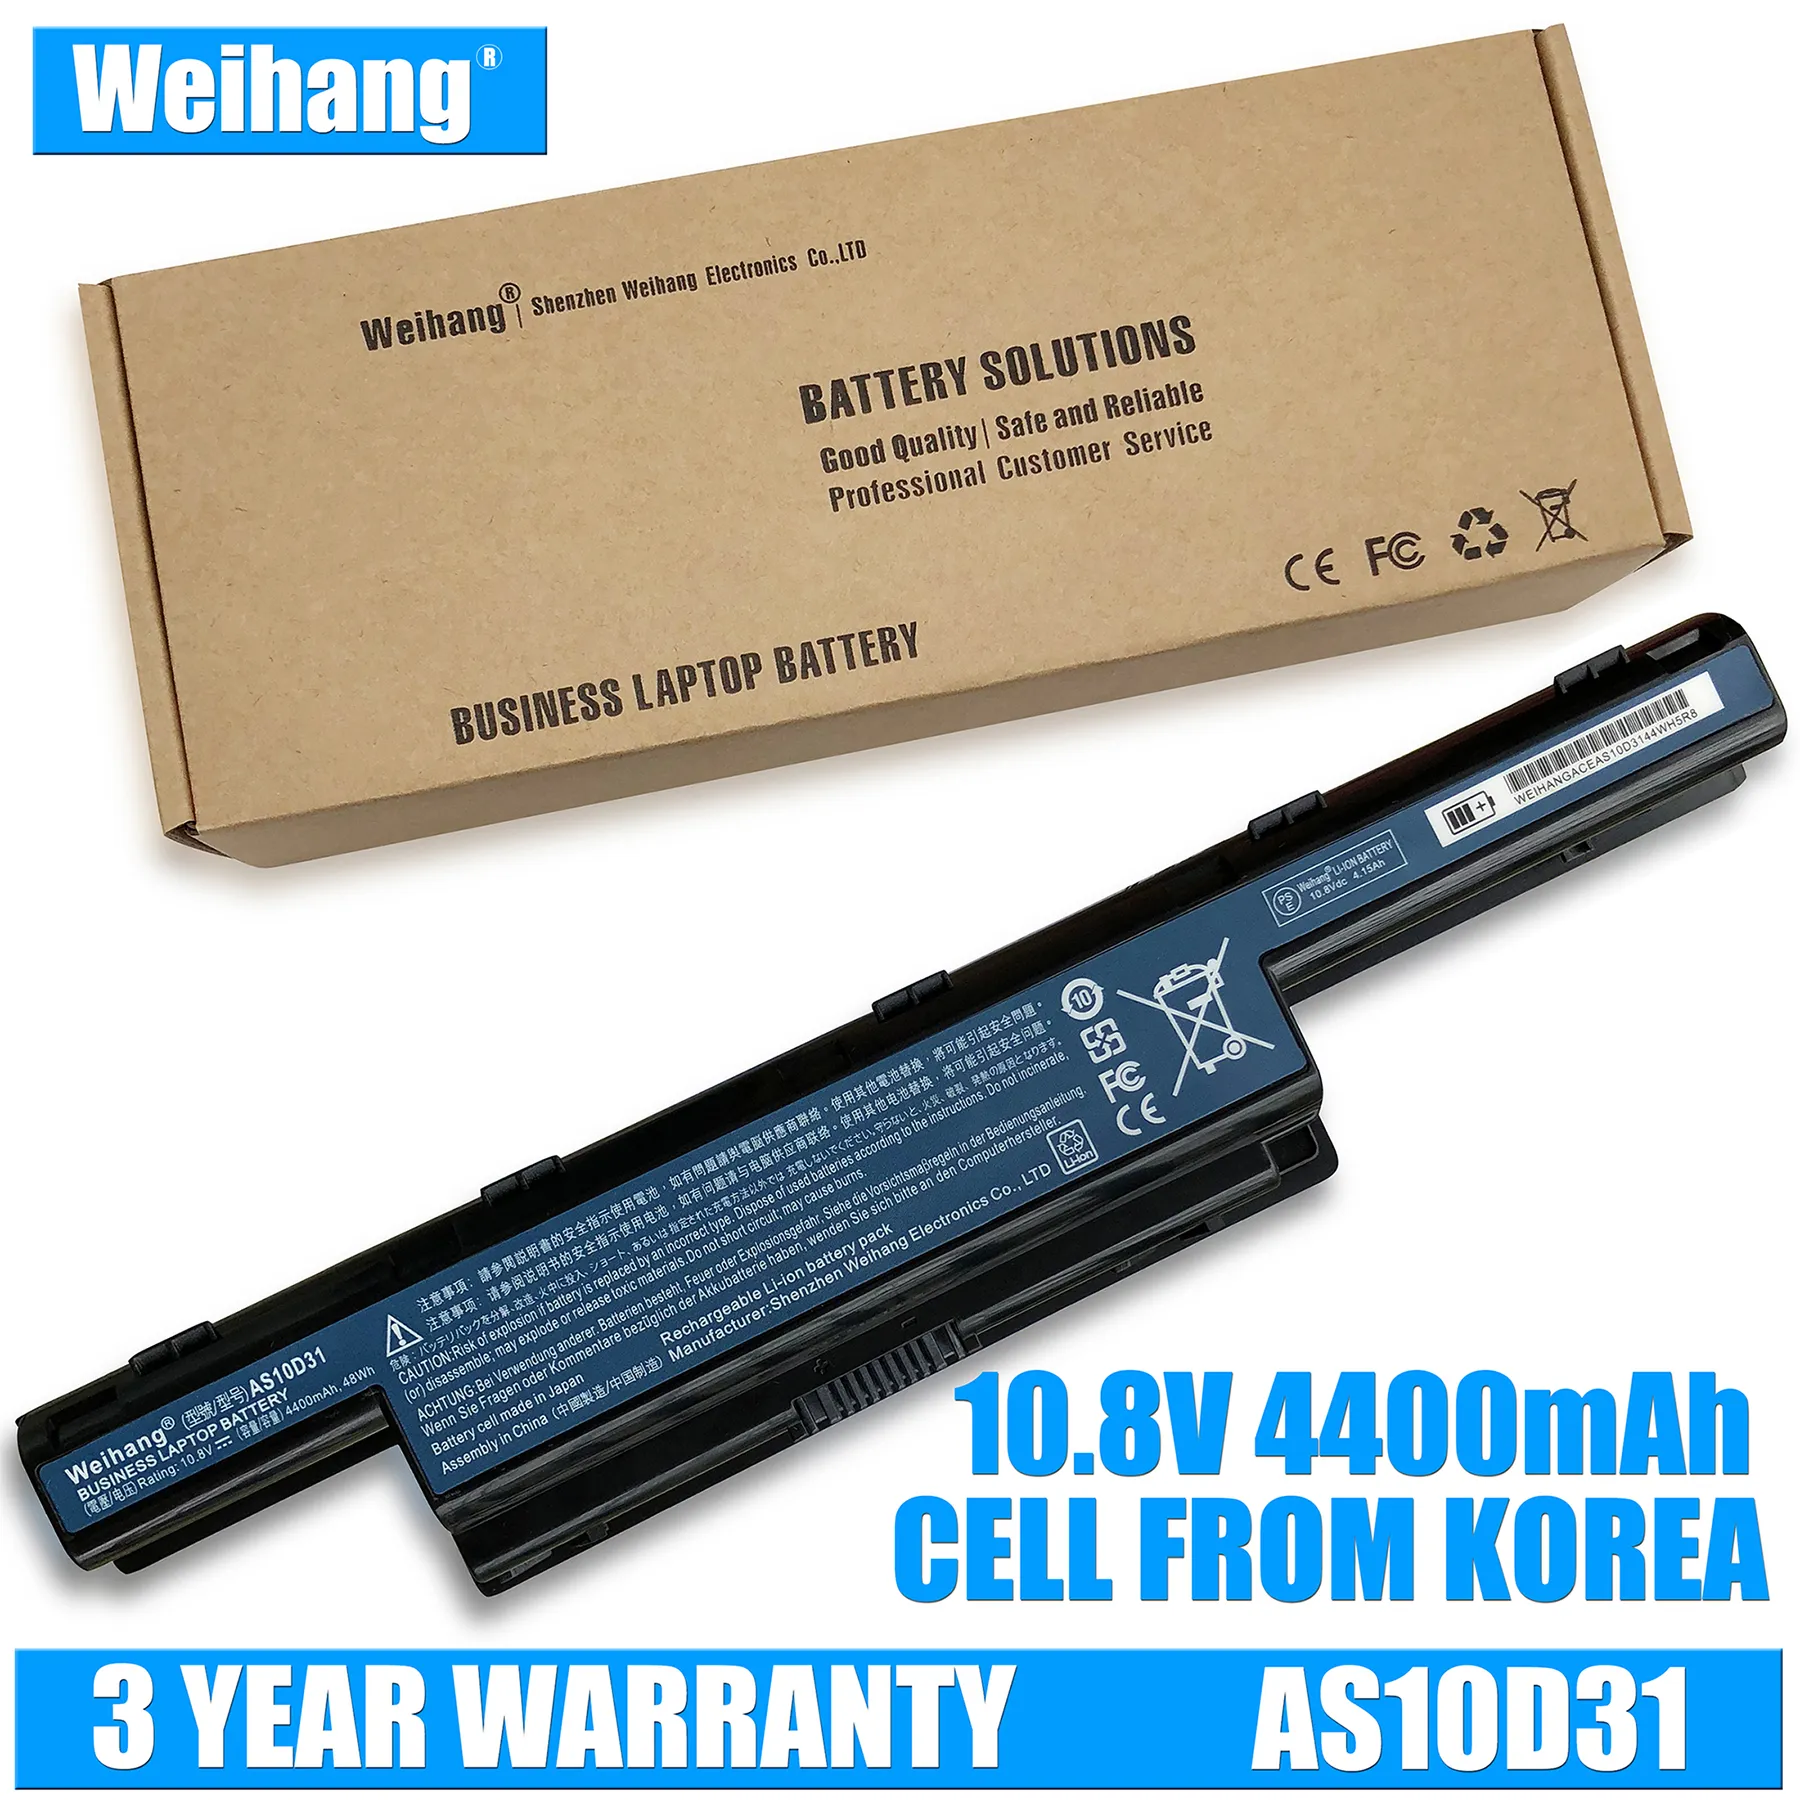 Korea Cell 4400mAh Weihang Batteri för AS10D31 AS10D51 AS10D61 AS10D41 AS10D71 för Acer Aspire 4741 5552G 5742 5750G 5741G